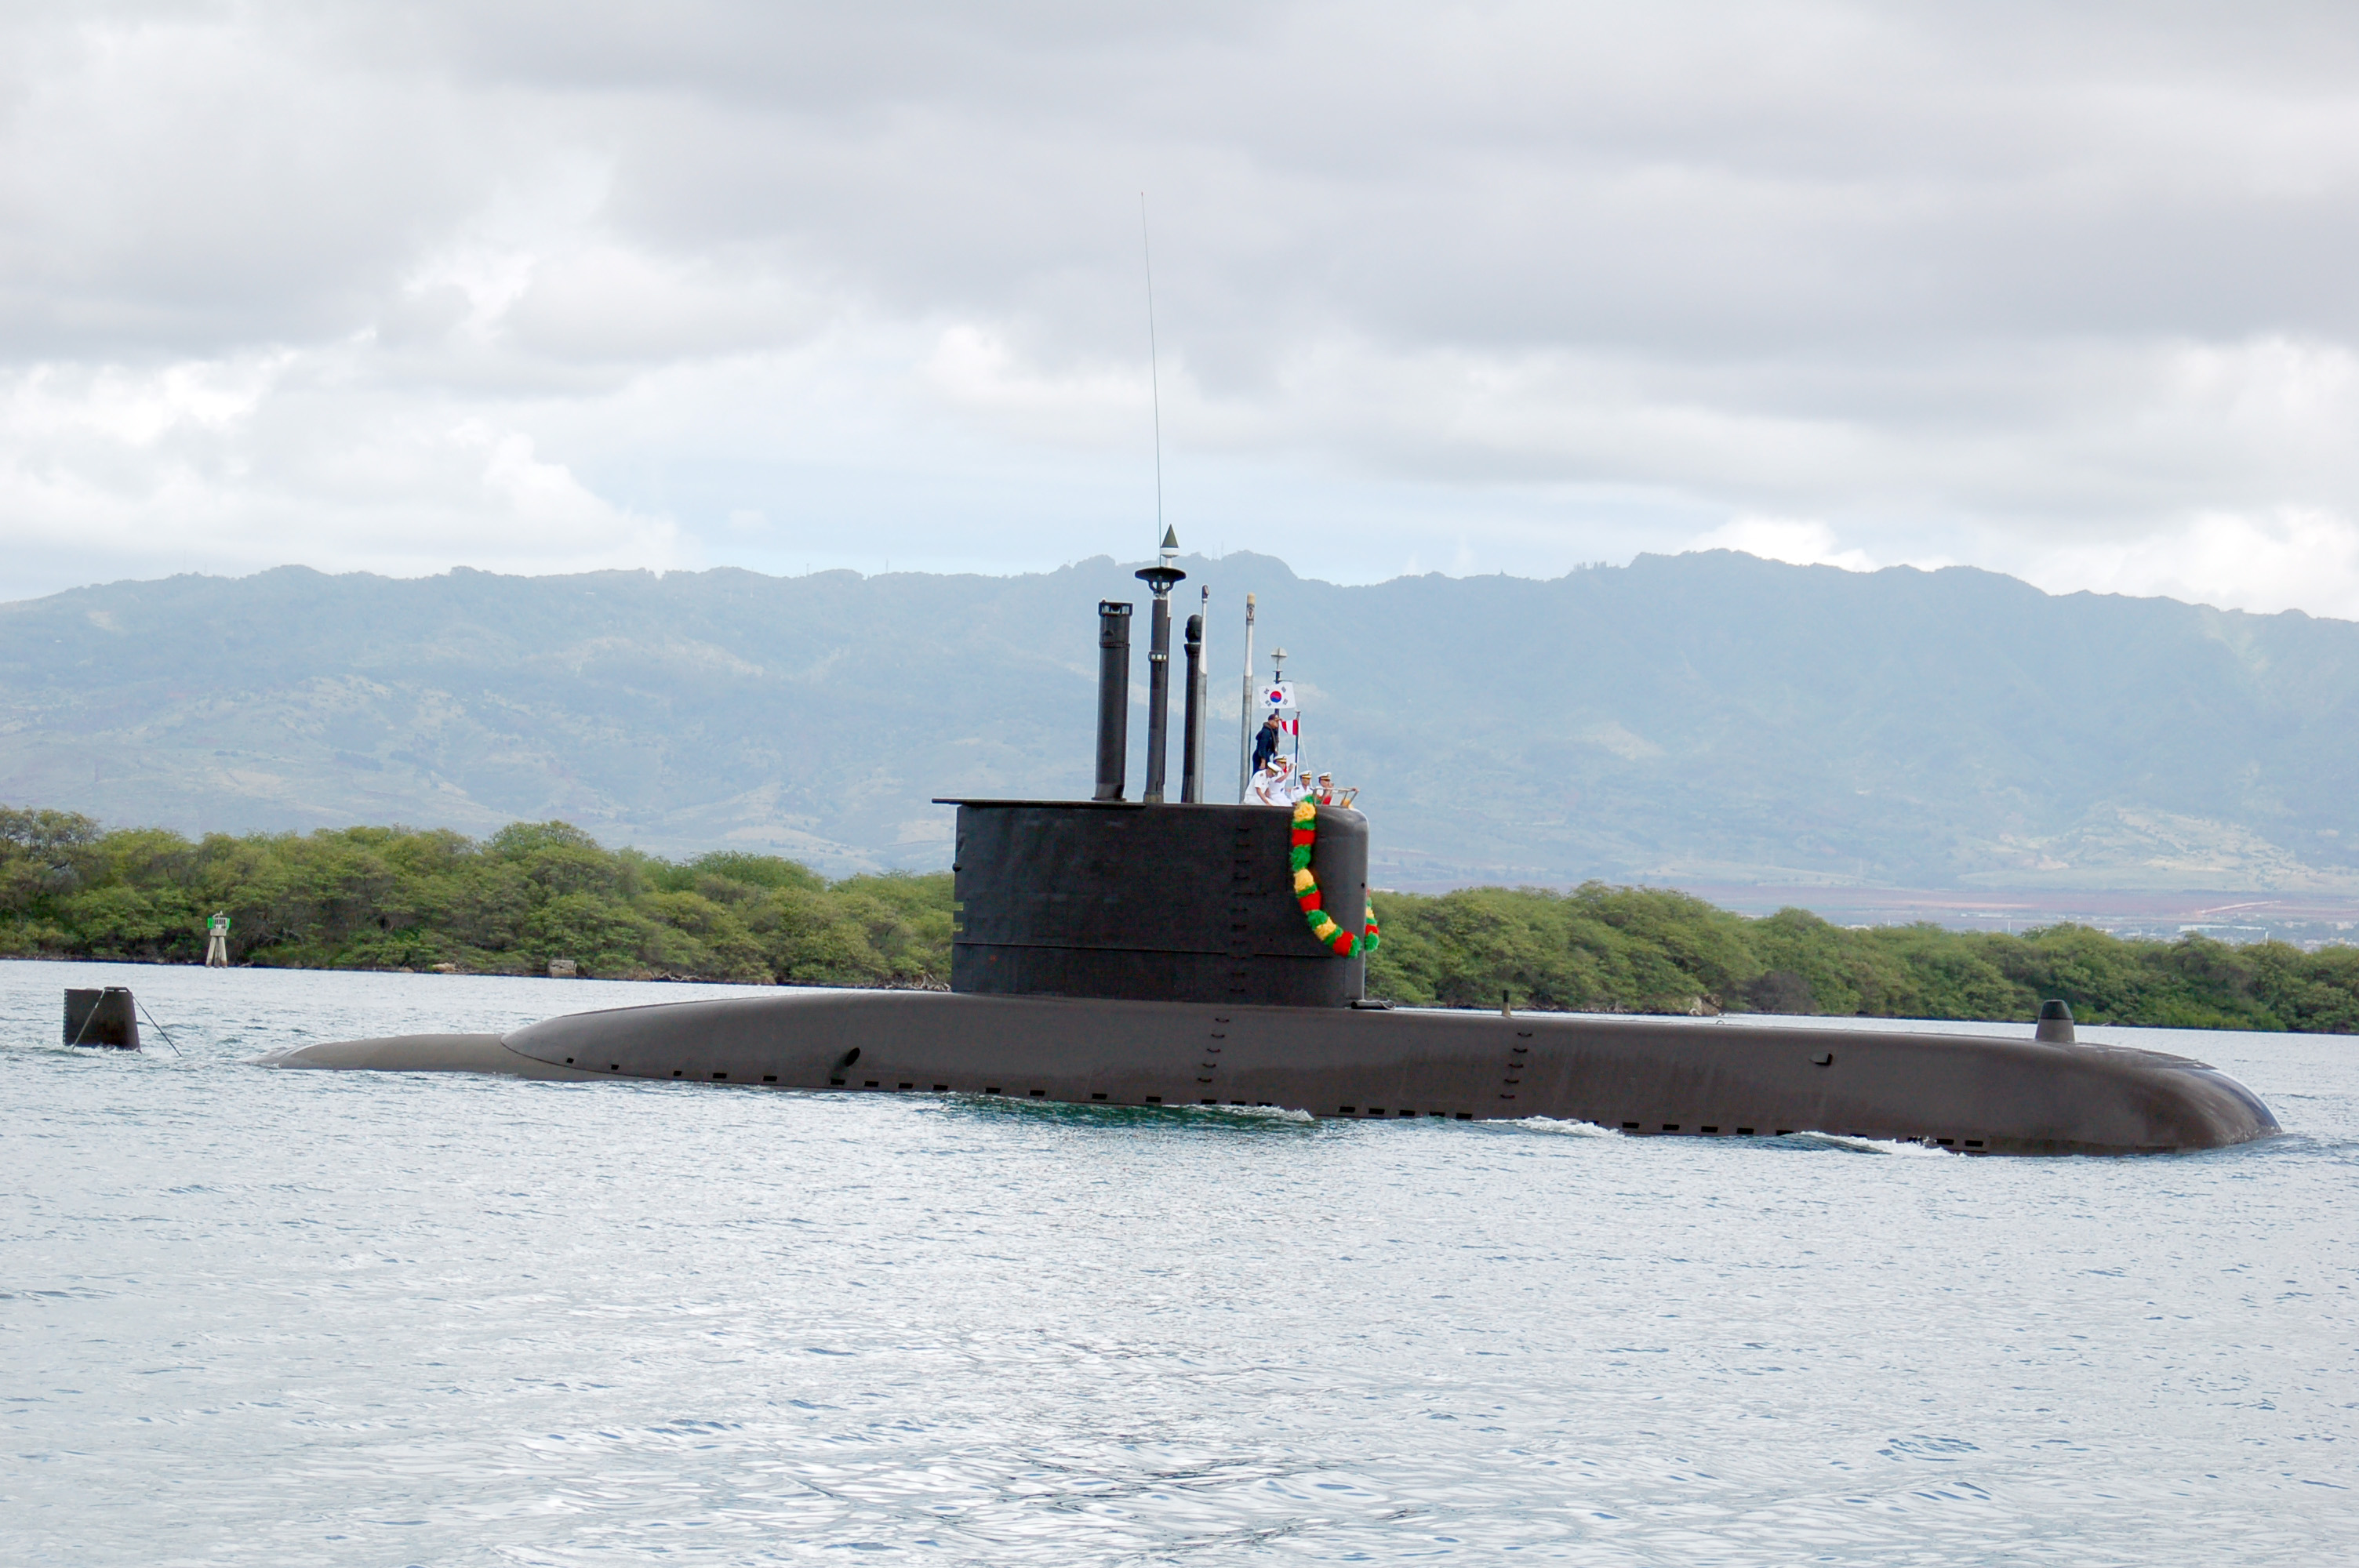 ROKS_Lee_Sunsin_(SS_068)_arrives_at_Naval_Station_Pearl_Harbor.jpg